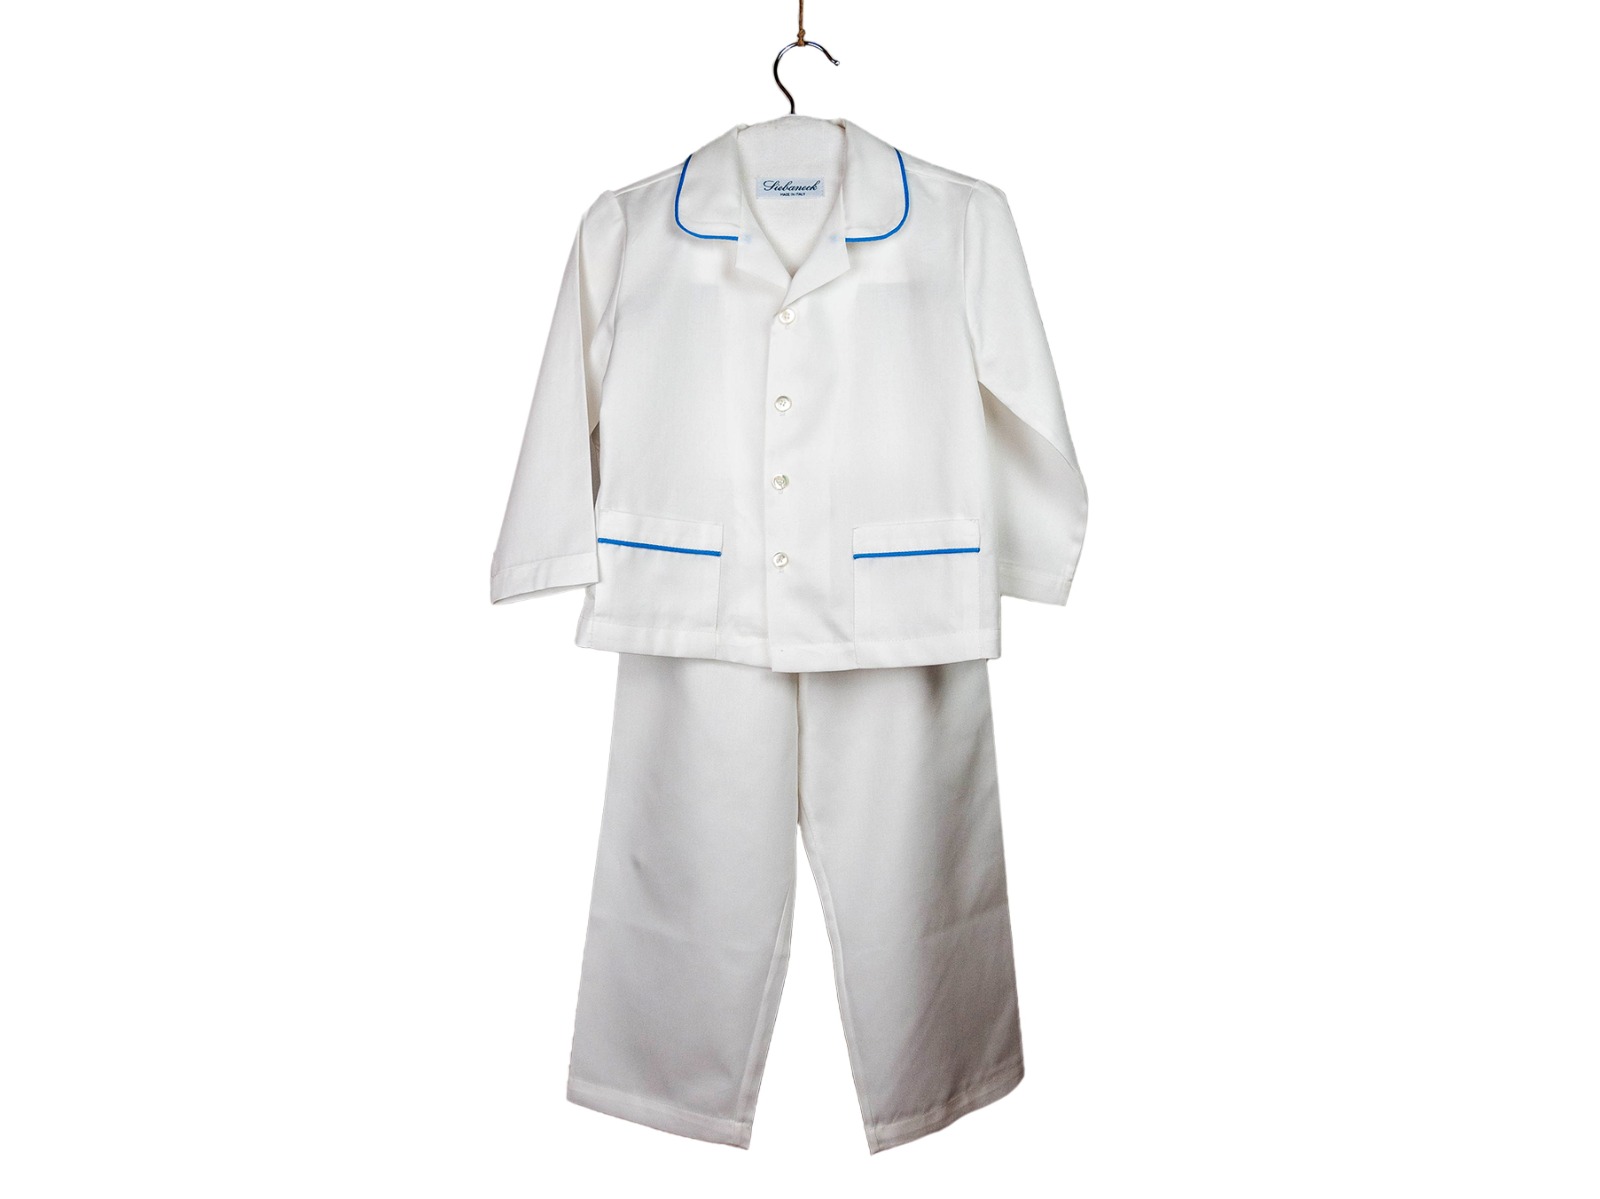 Siebaneck, i pigiami artigianali italiani: - bambino- mod.1 bis bianco profilo bluette